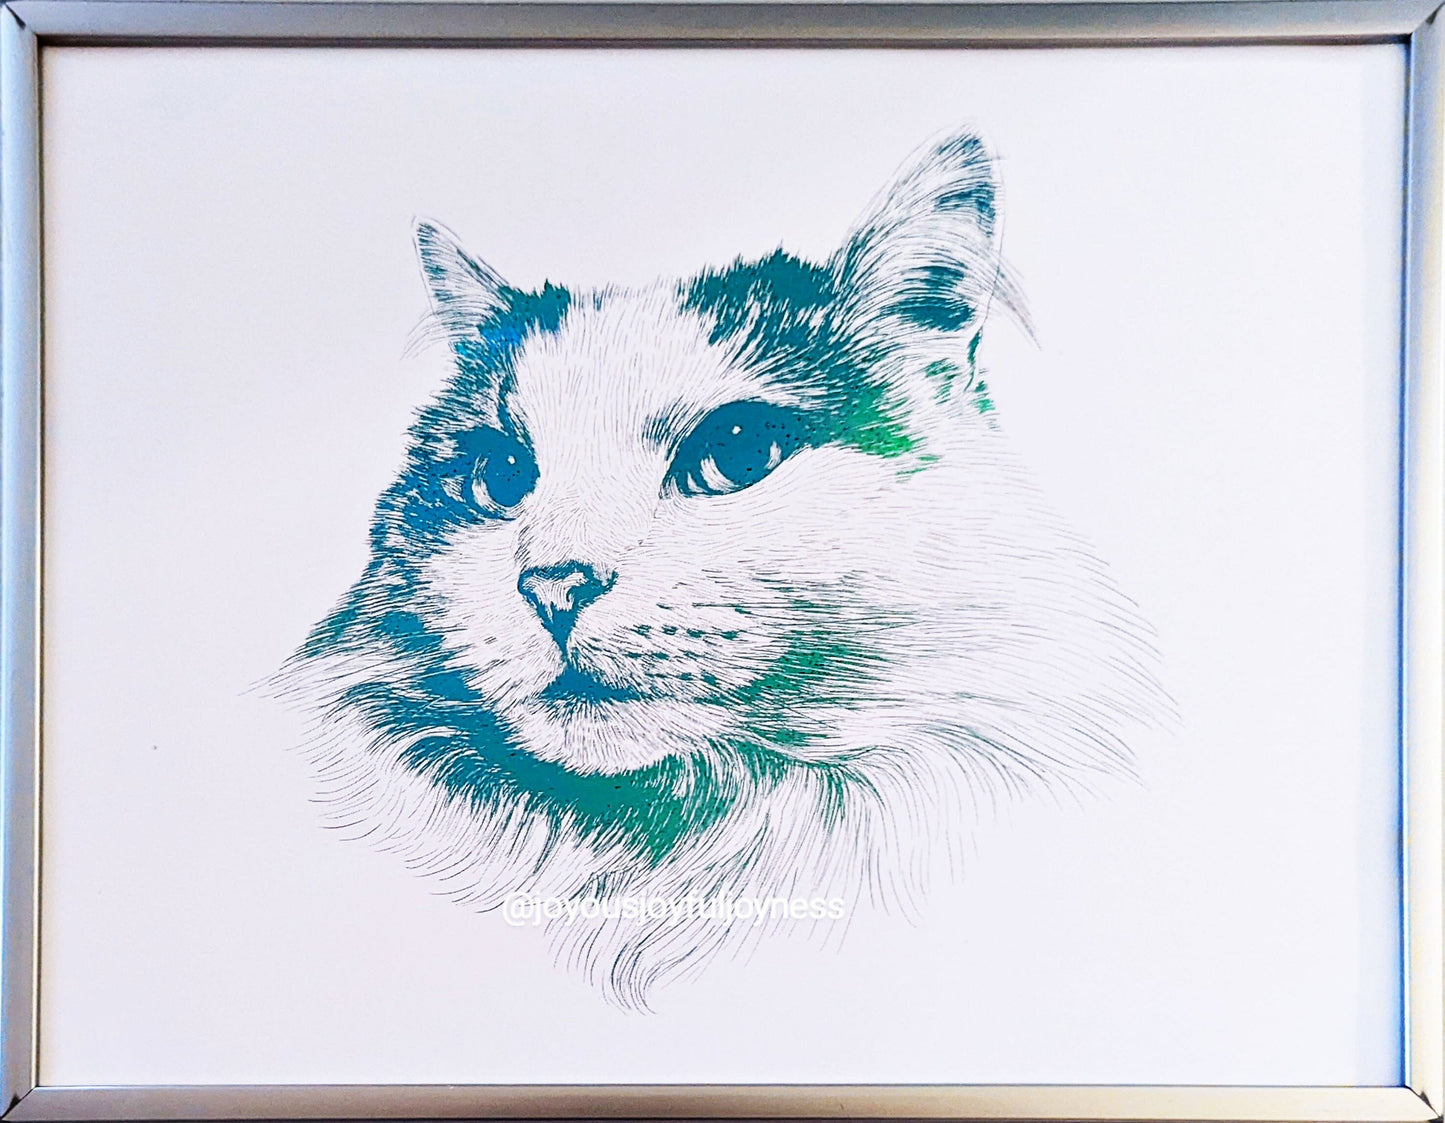 Custom Cat Foil Portraits Posters, Prints, & Visual Artwork JoyousJoyfulJoyness 